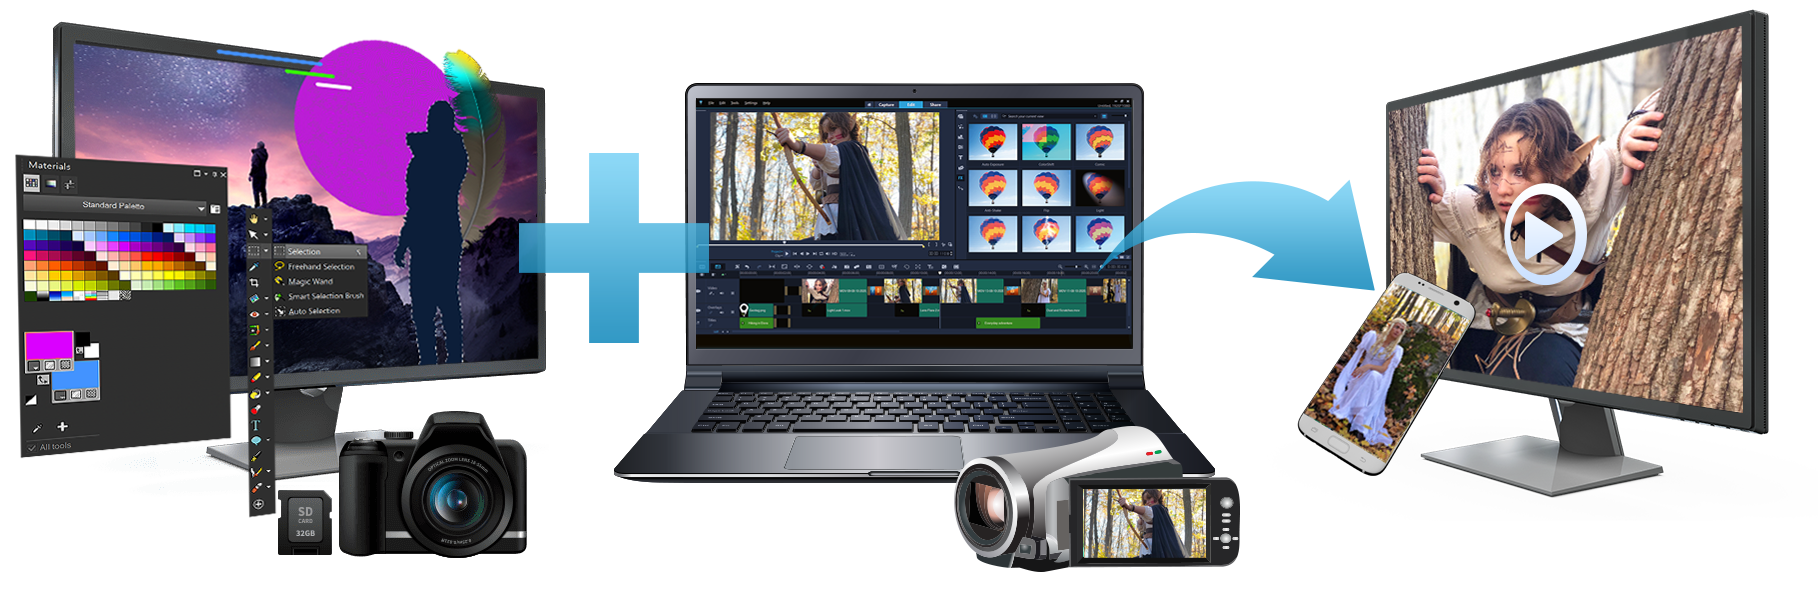 Your Ultimate Photo Video Editor – Corel Photo Video Bundle Ultimate